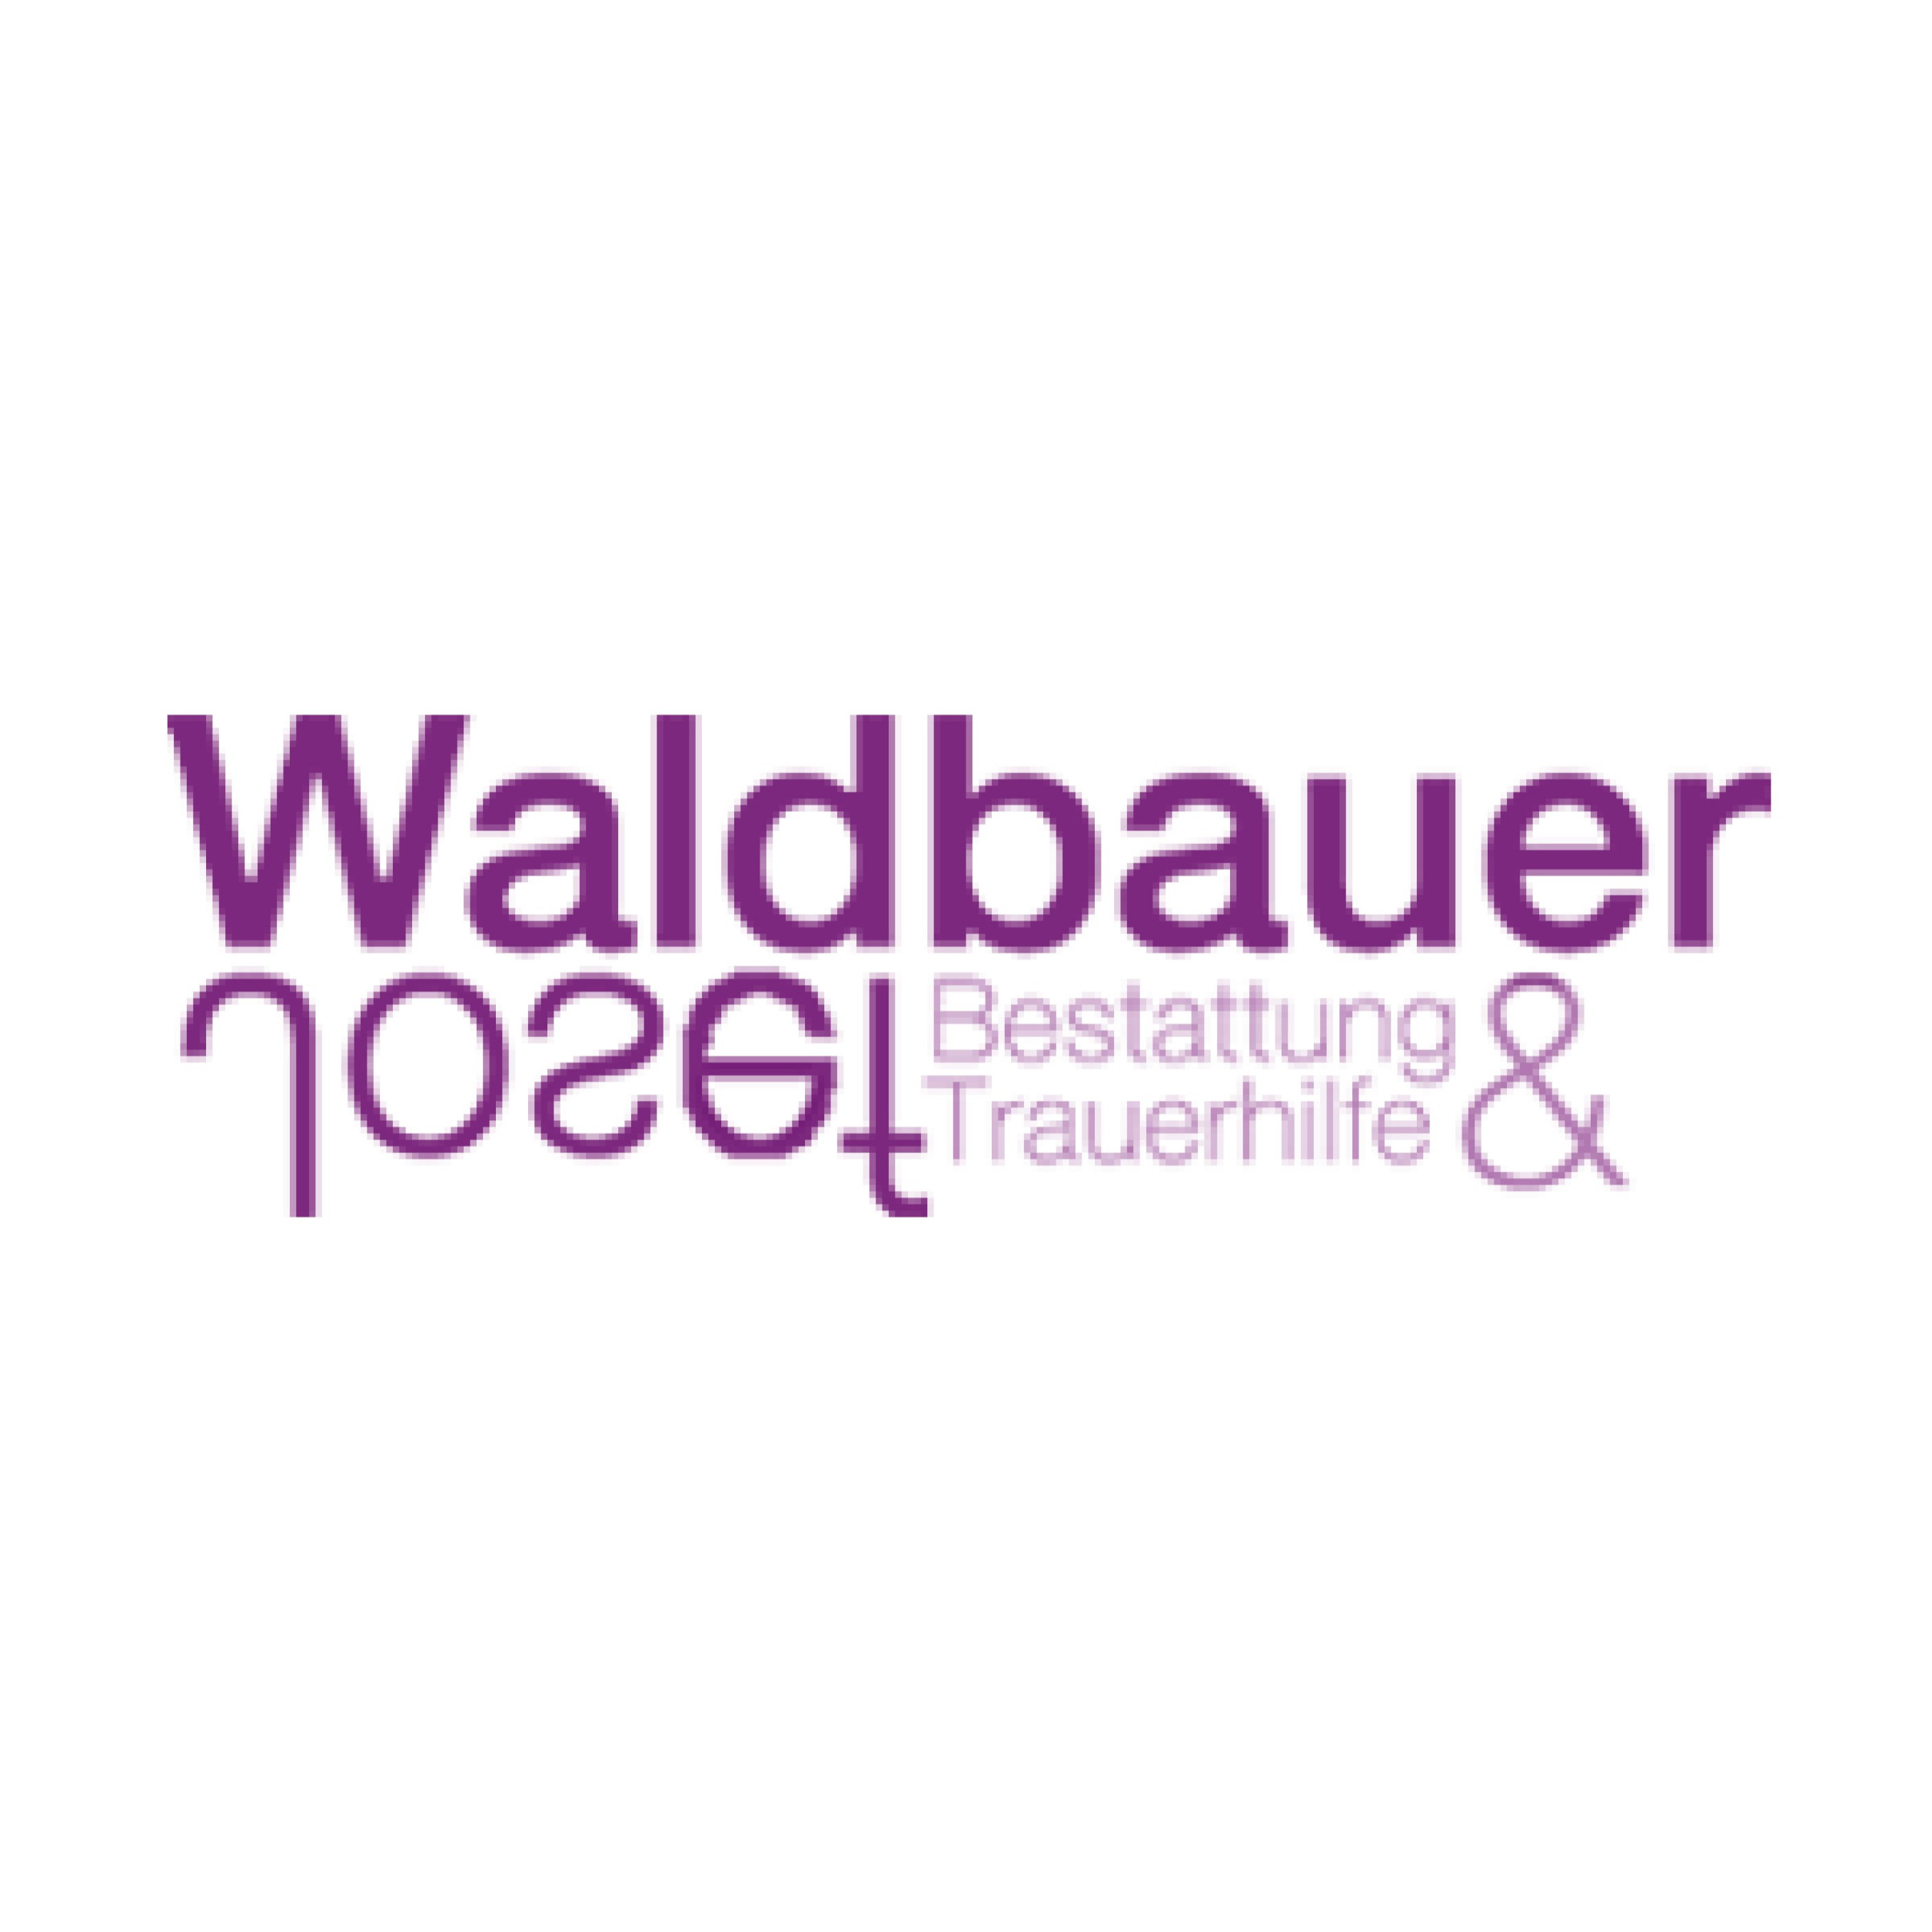 Josef Waldbauer Logo